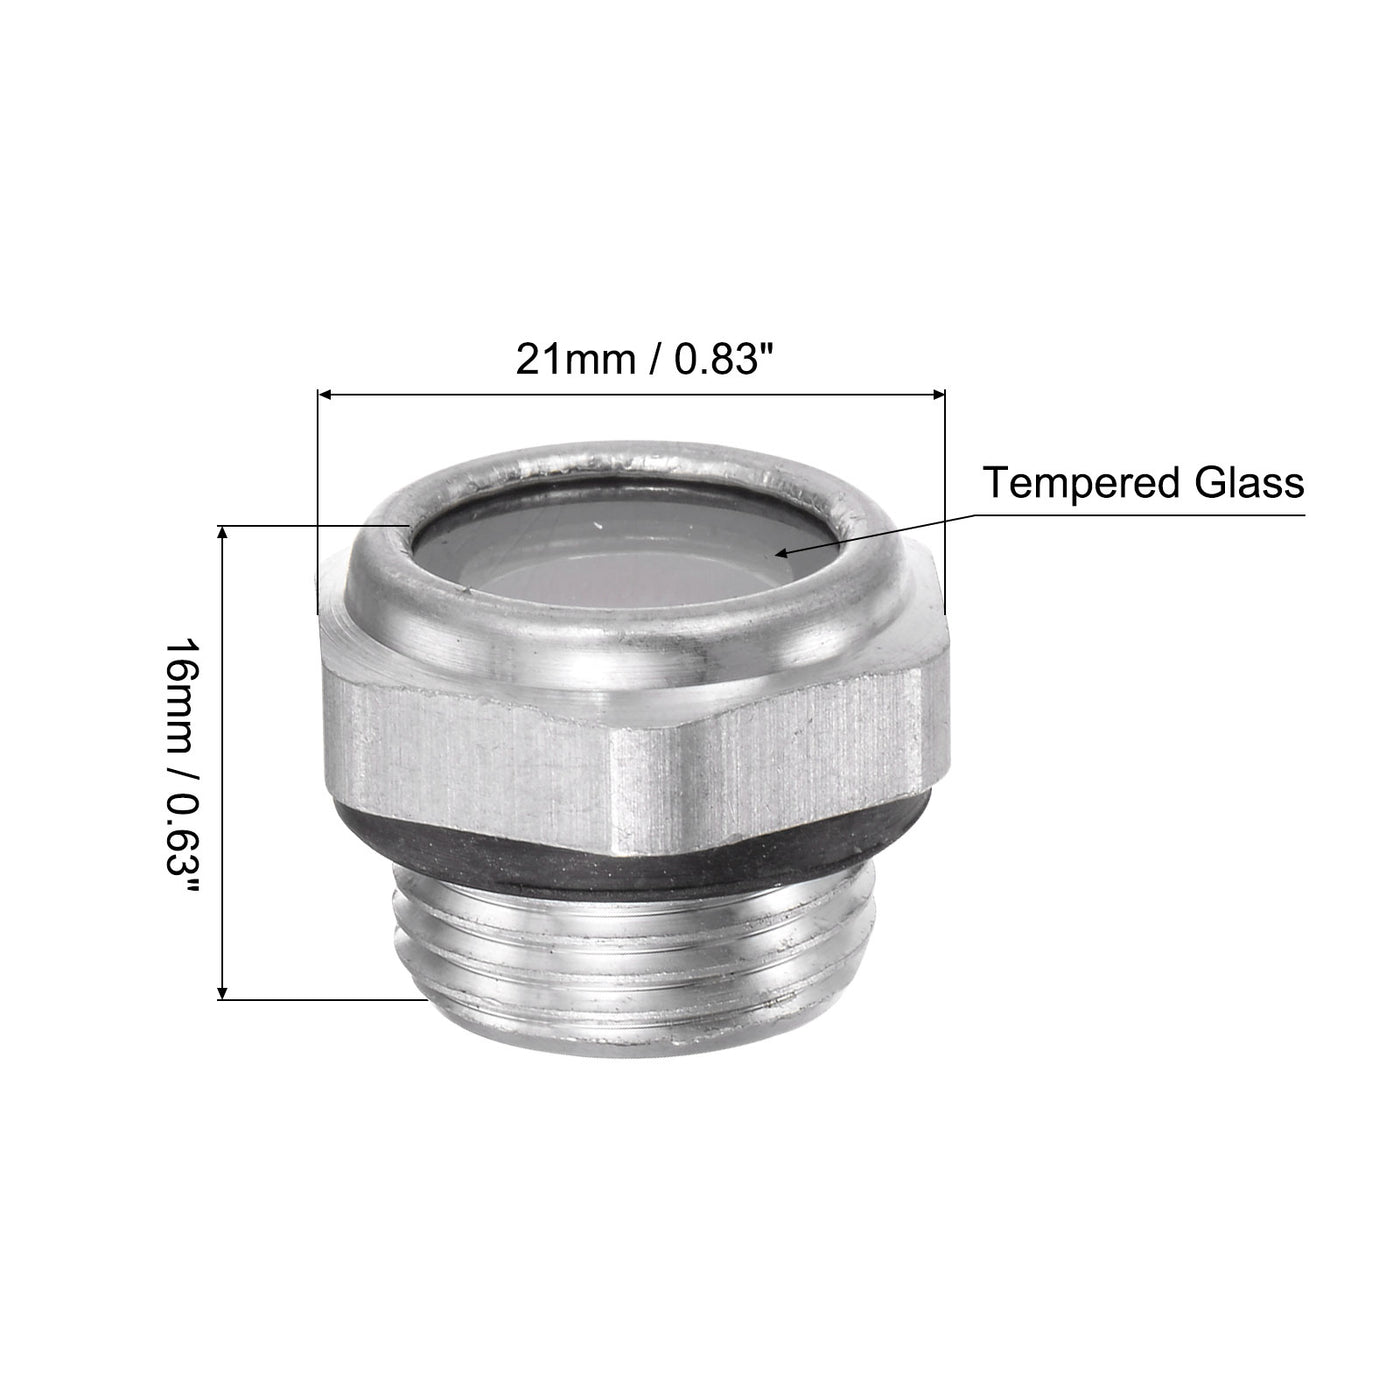 Uxcell Uxcell Air Compressor Oil Level Gauge Sight Glass G1/2" Male Thread Aluminum